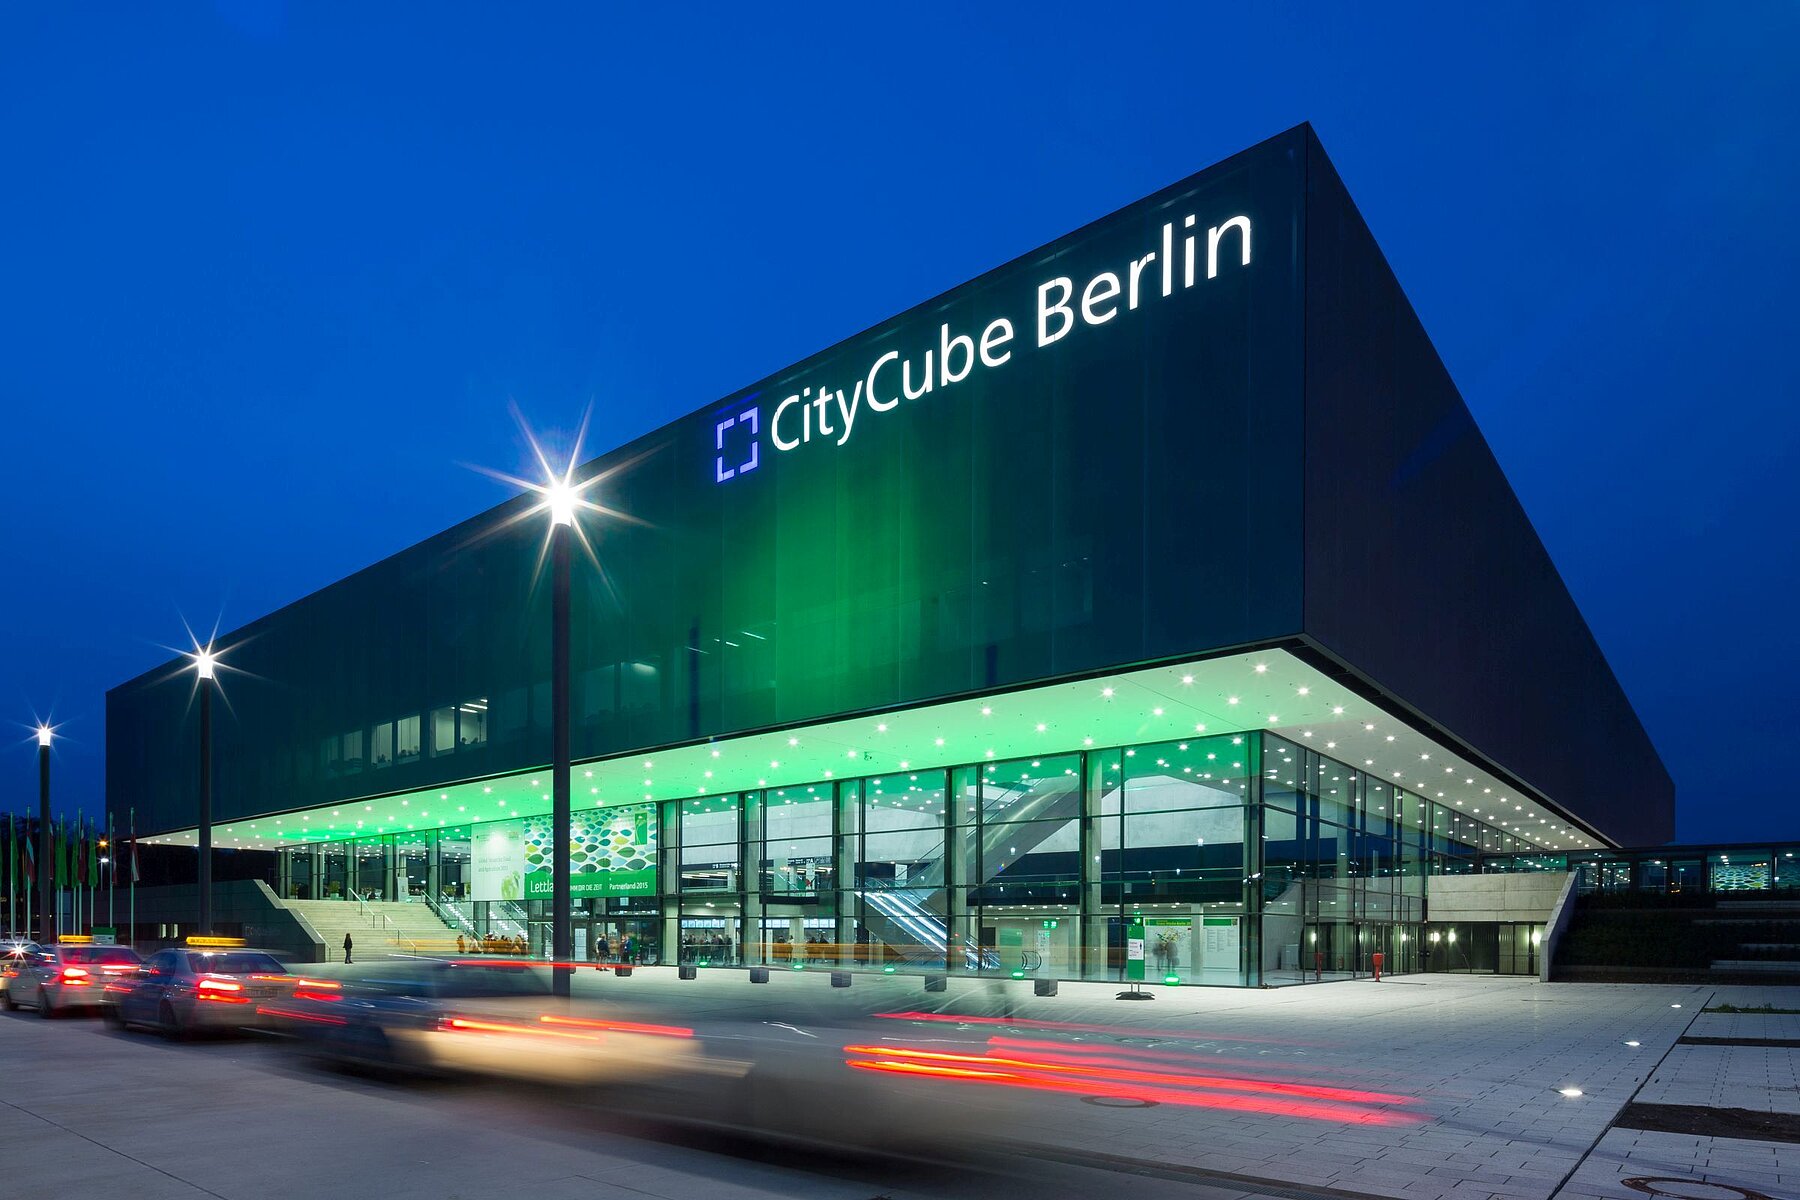 Der City Cube Berlin, nachts grün beleuchtet. Vor dem Gebäude parken Taxis.